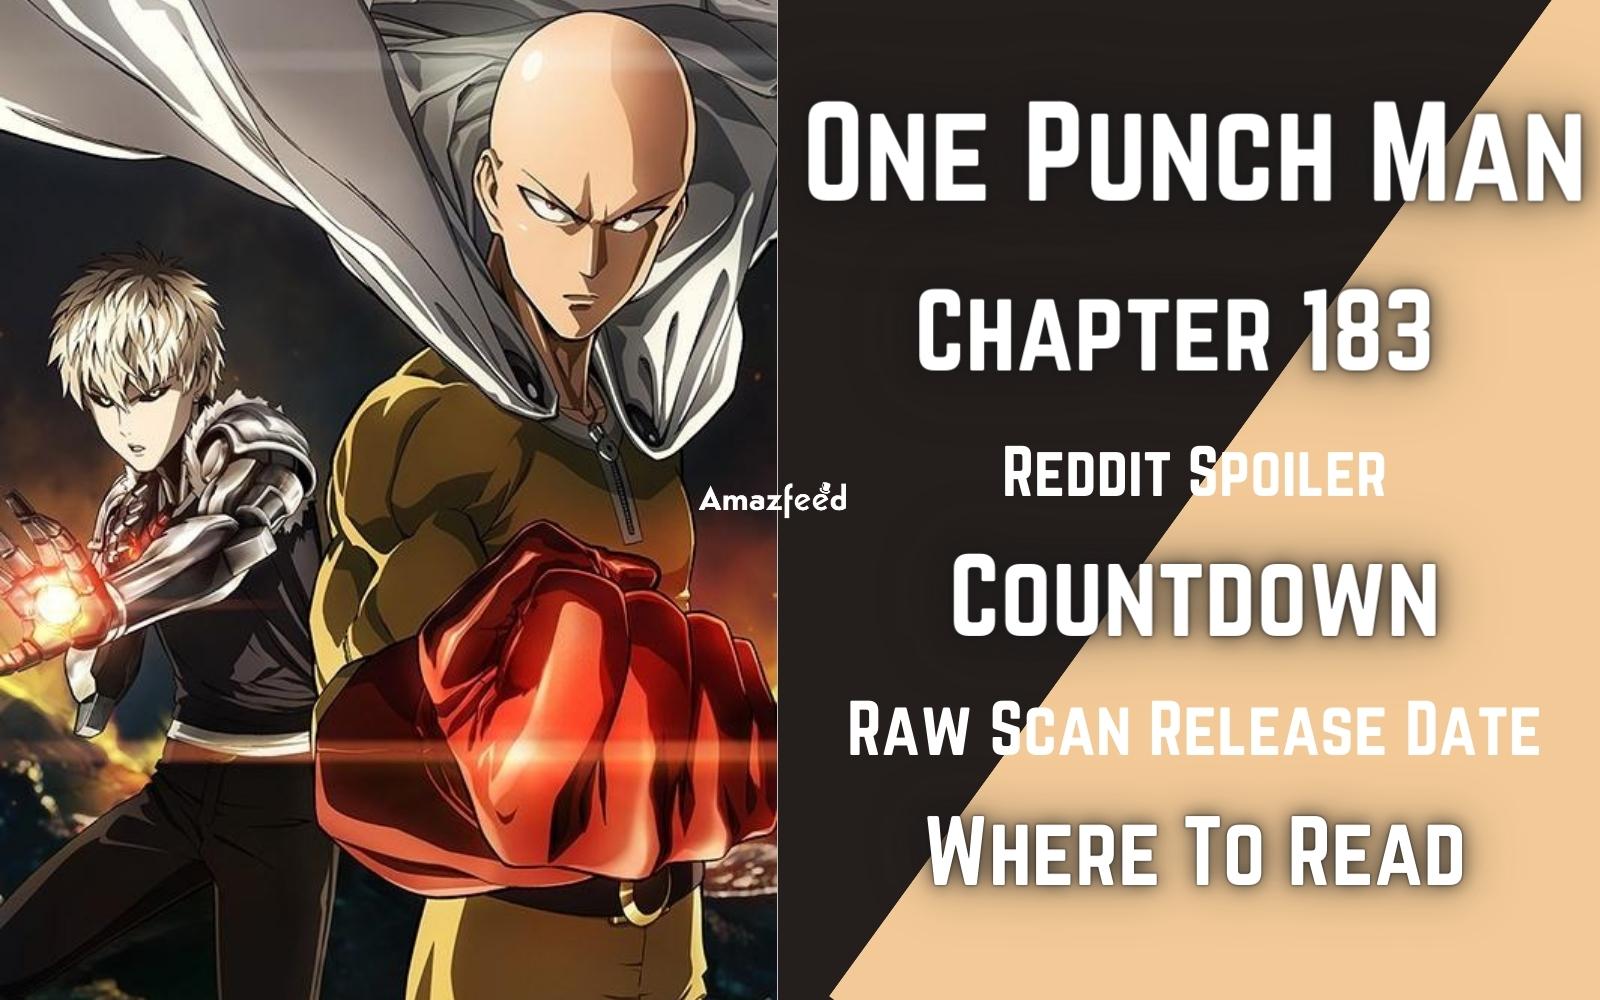 one punch season 3: Release Date, Countdown, Trailer, Cast, Plot?